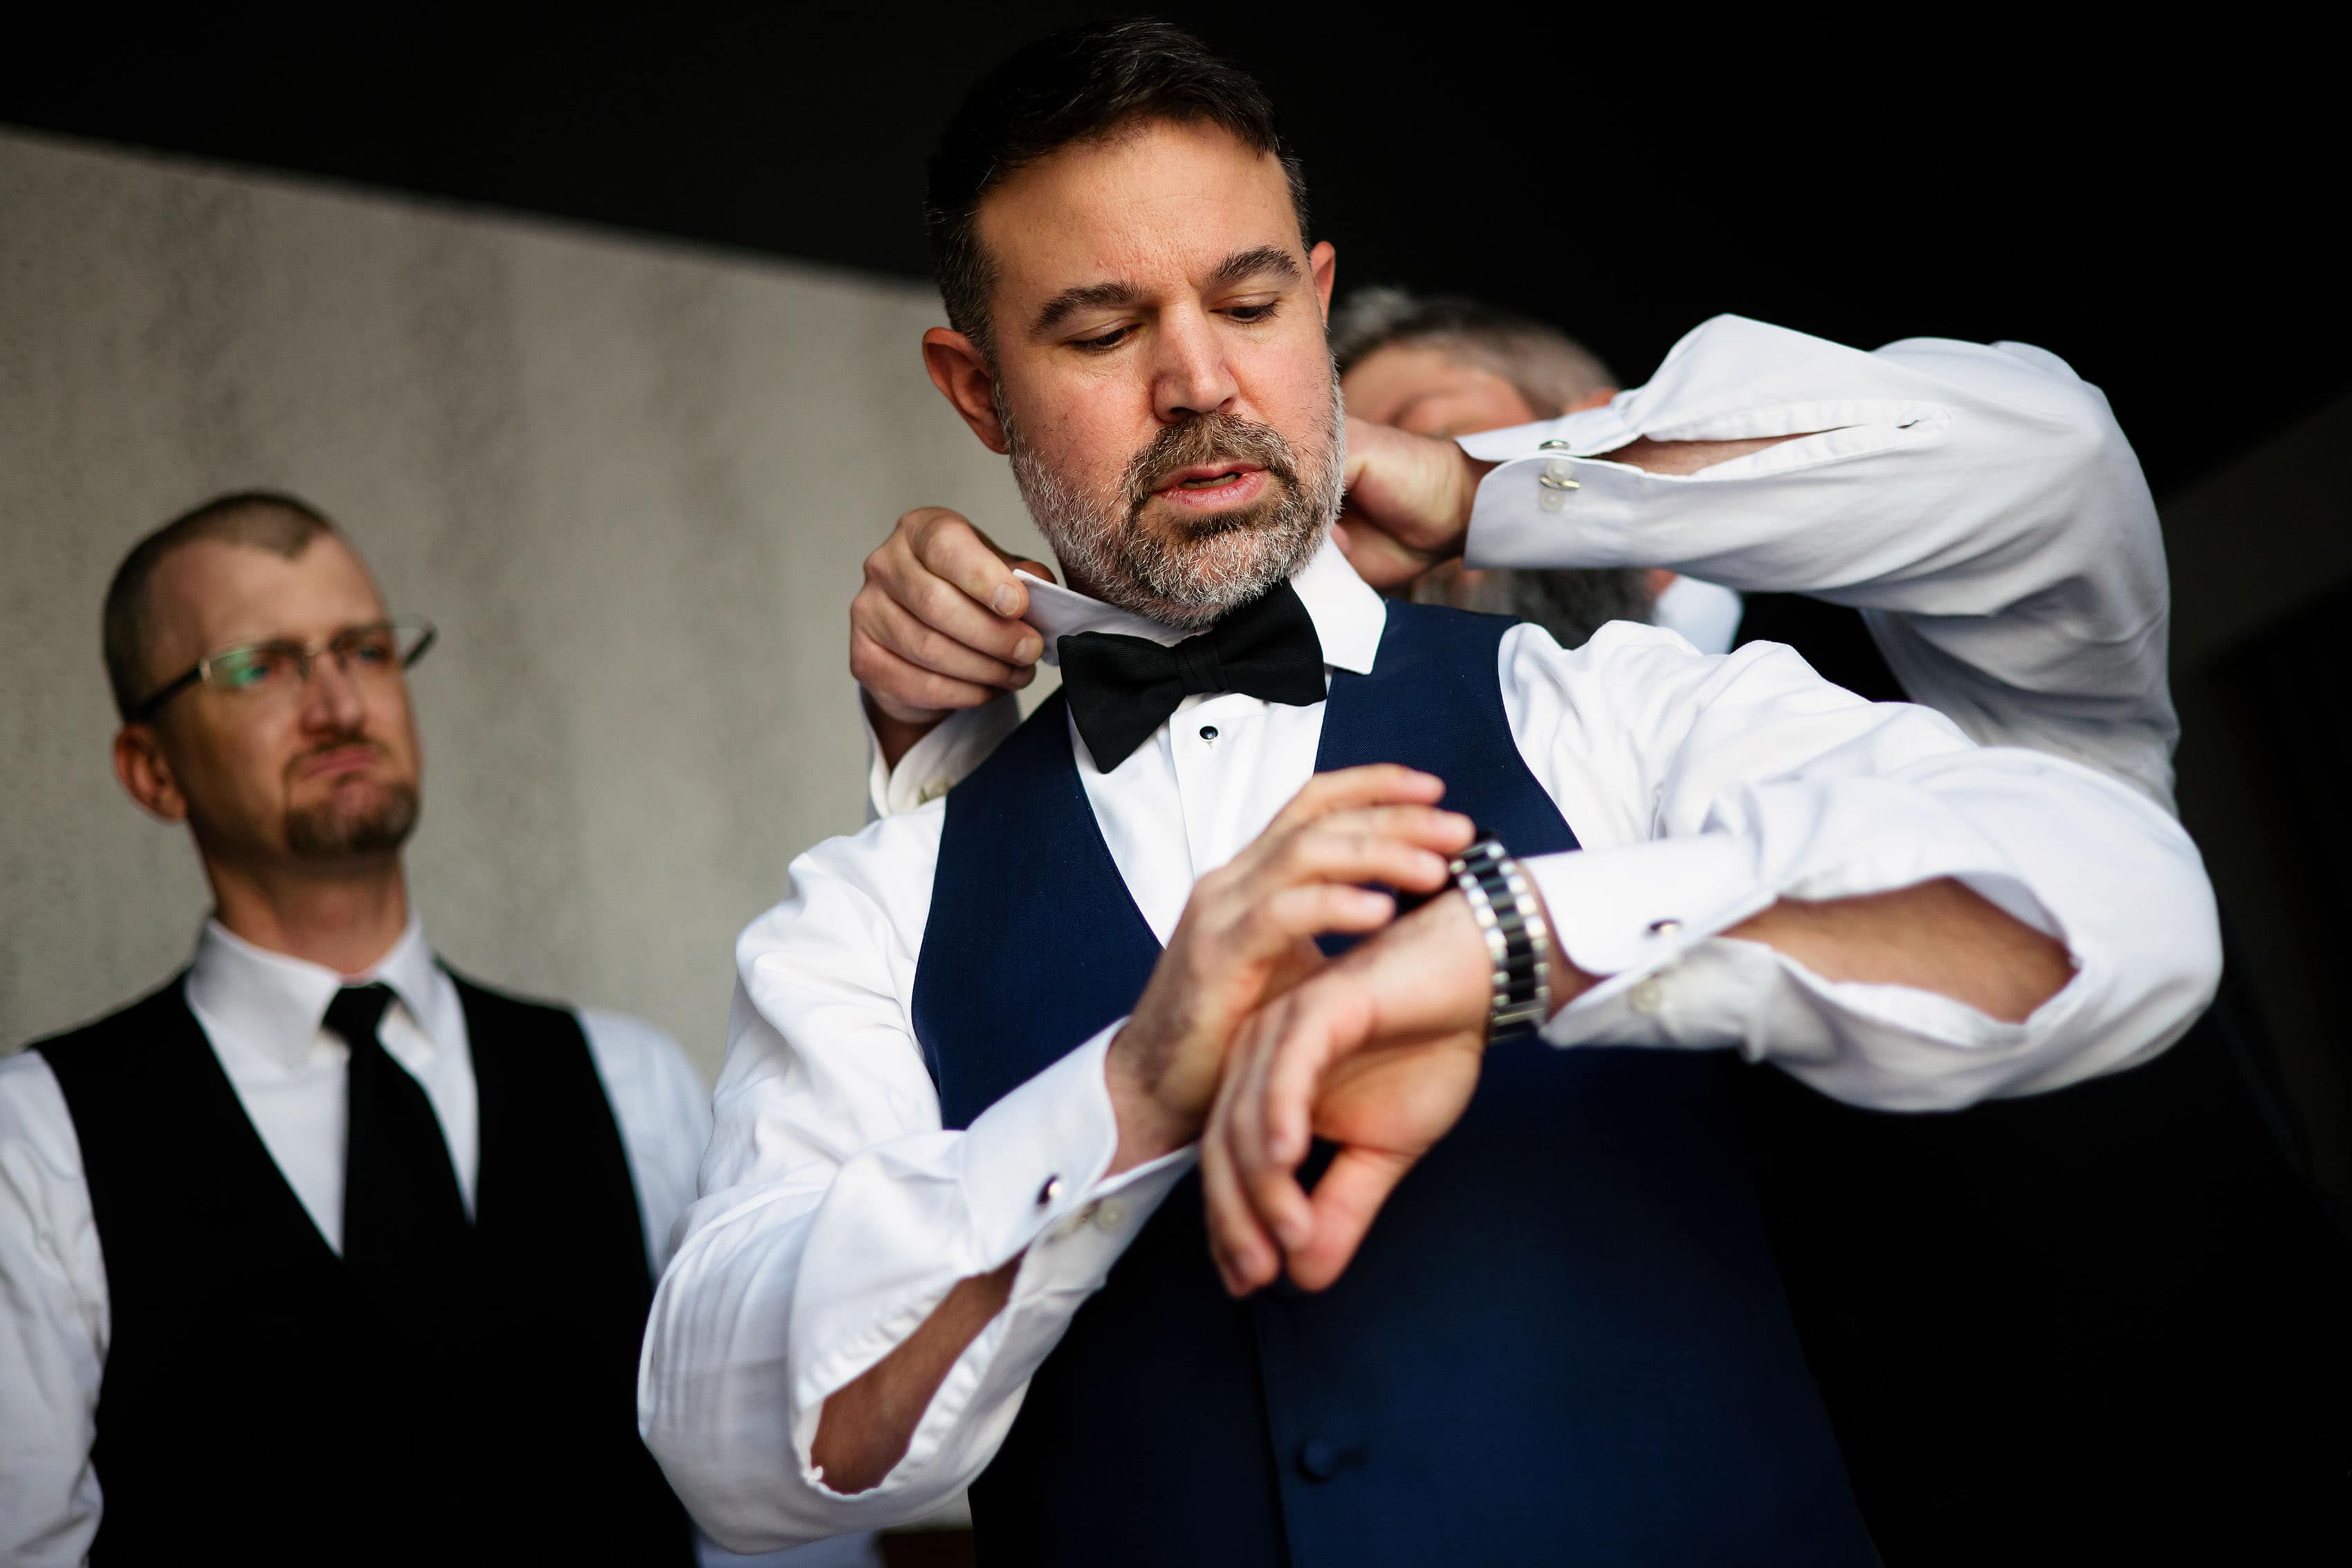 The groom adjusts his watch